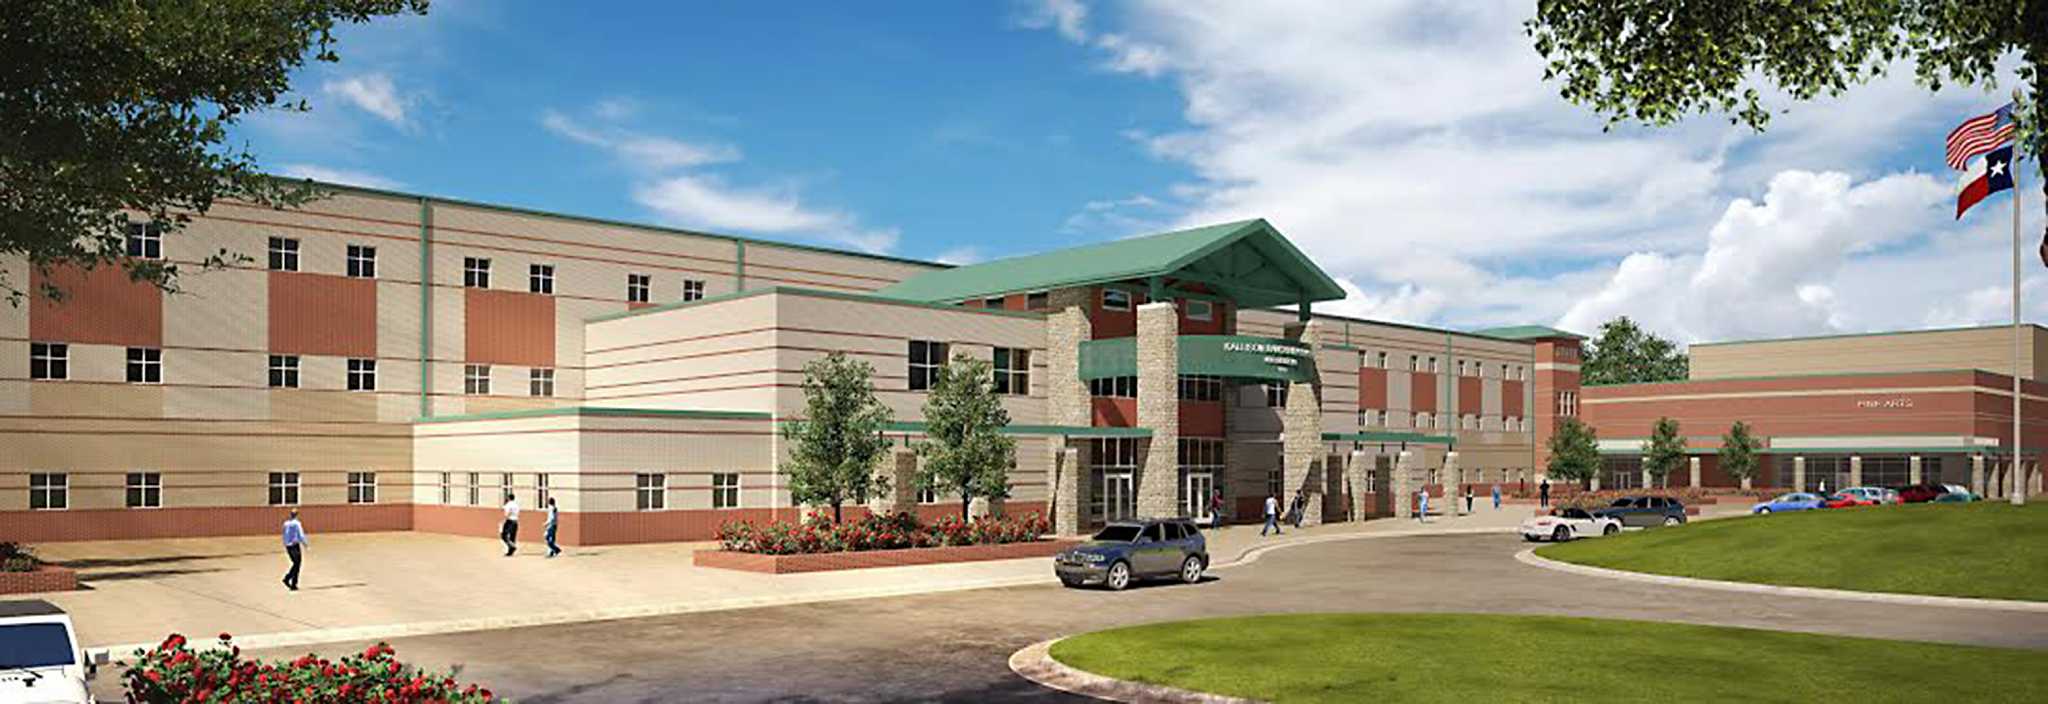 Northside ISD names new high school San Antonio ExpressNews